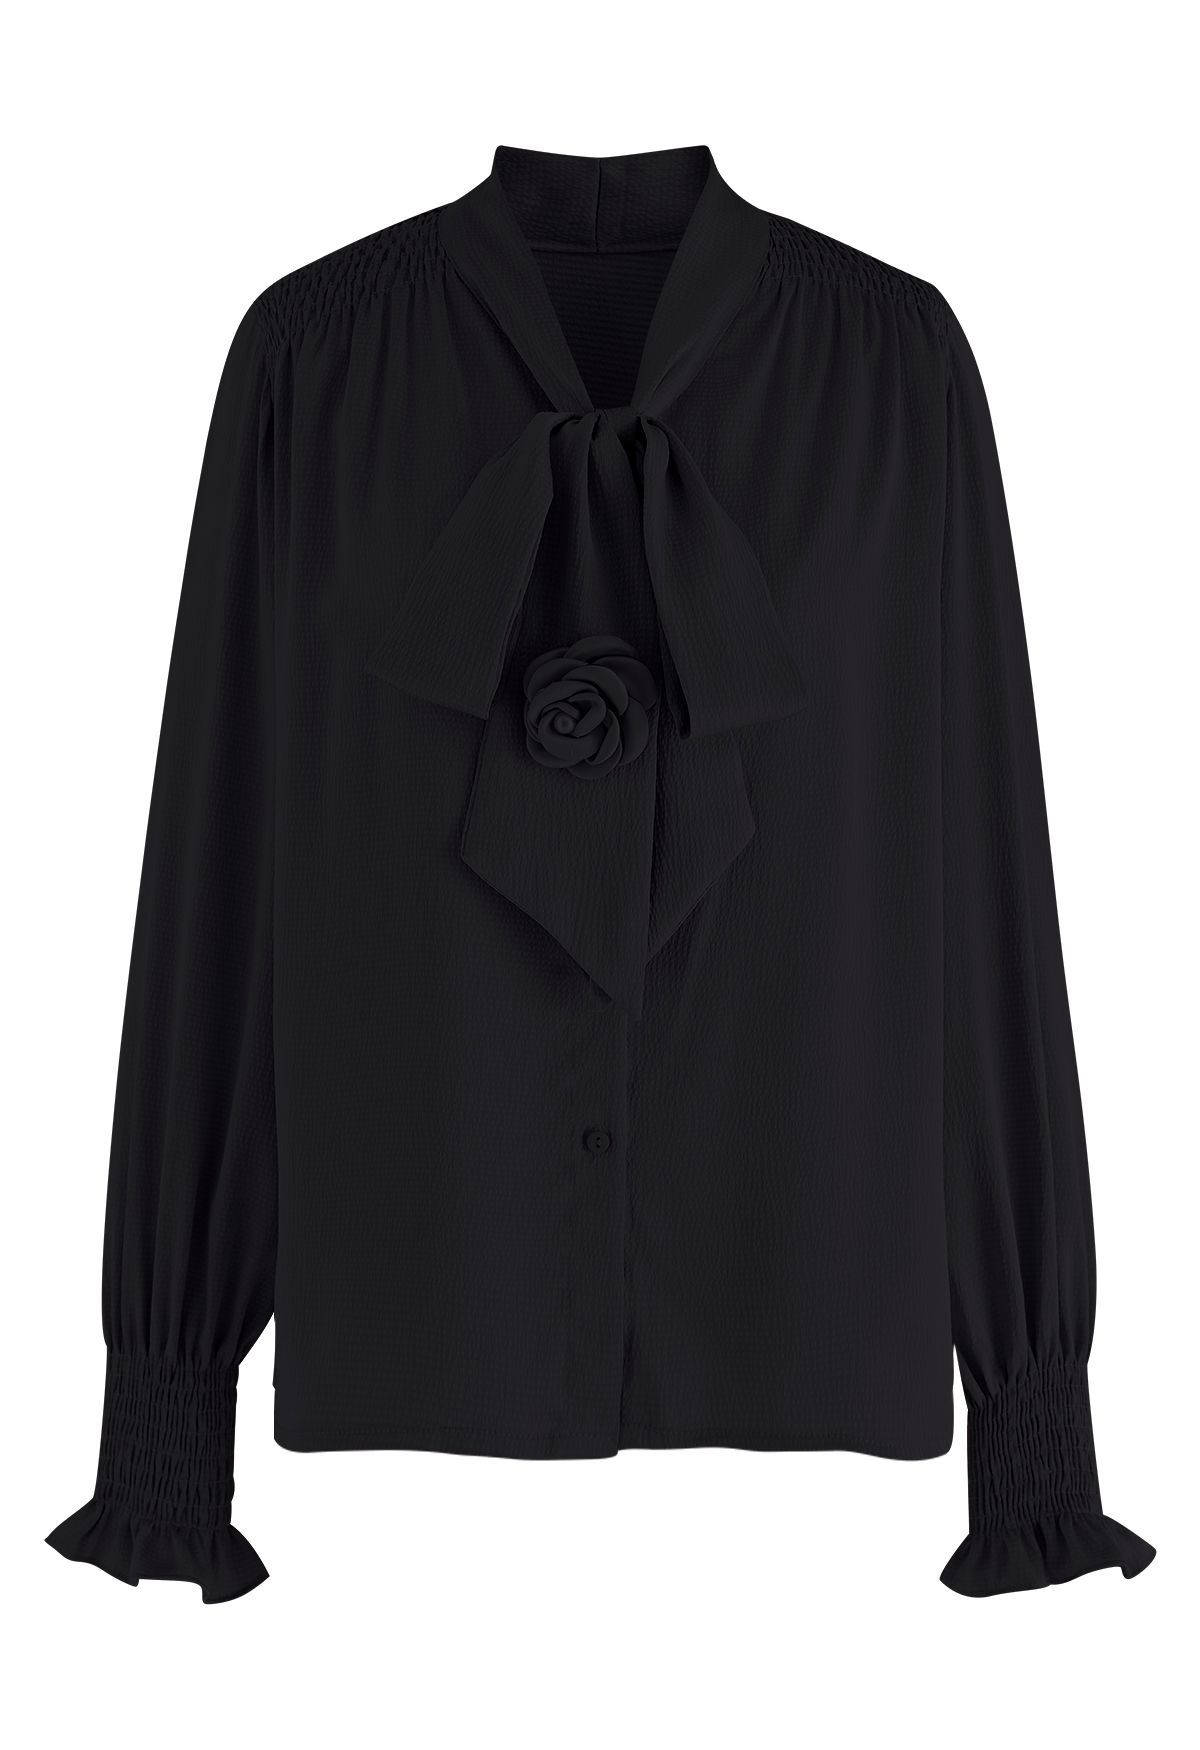 Rose Bowknot Embossed Shirt in Black